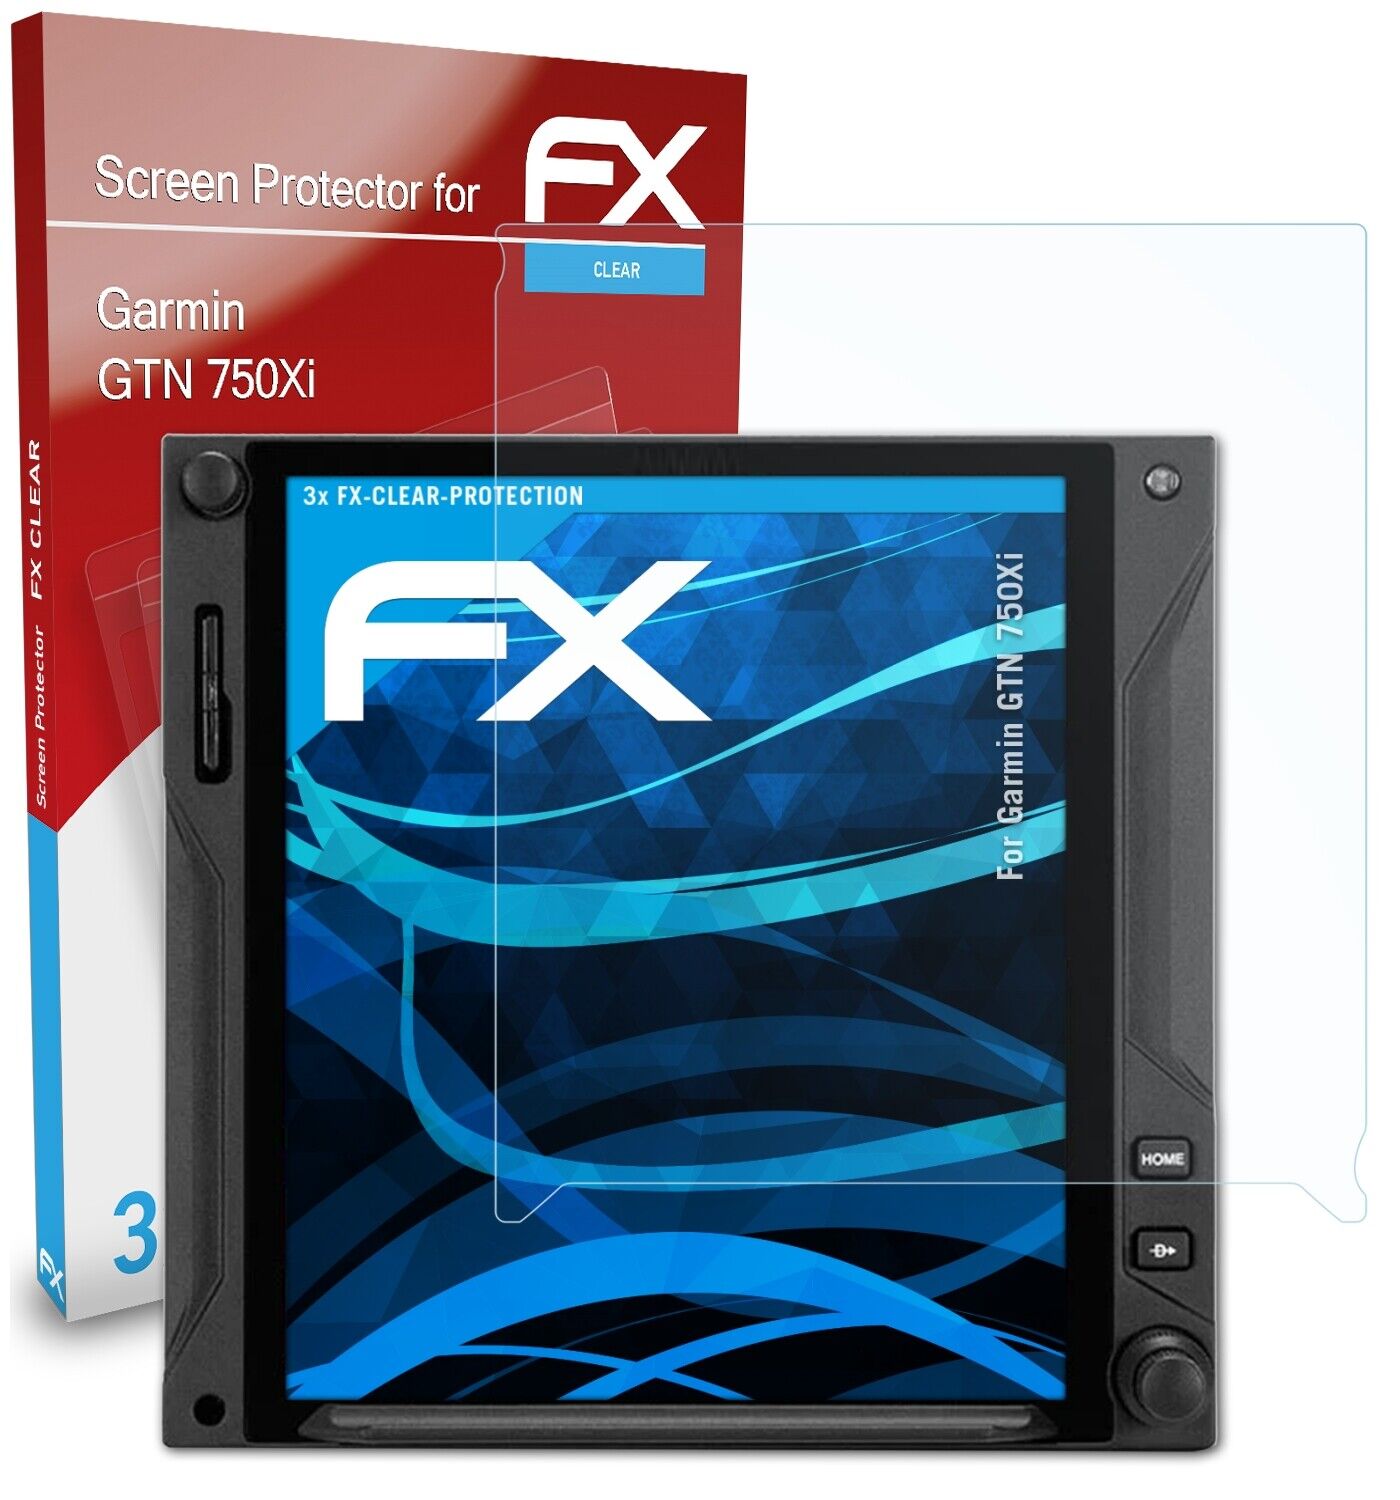 atFoliX 3x Screen Protection Film for Garmin GTN 750Xi Screen Protector clear